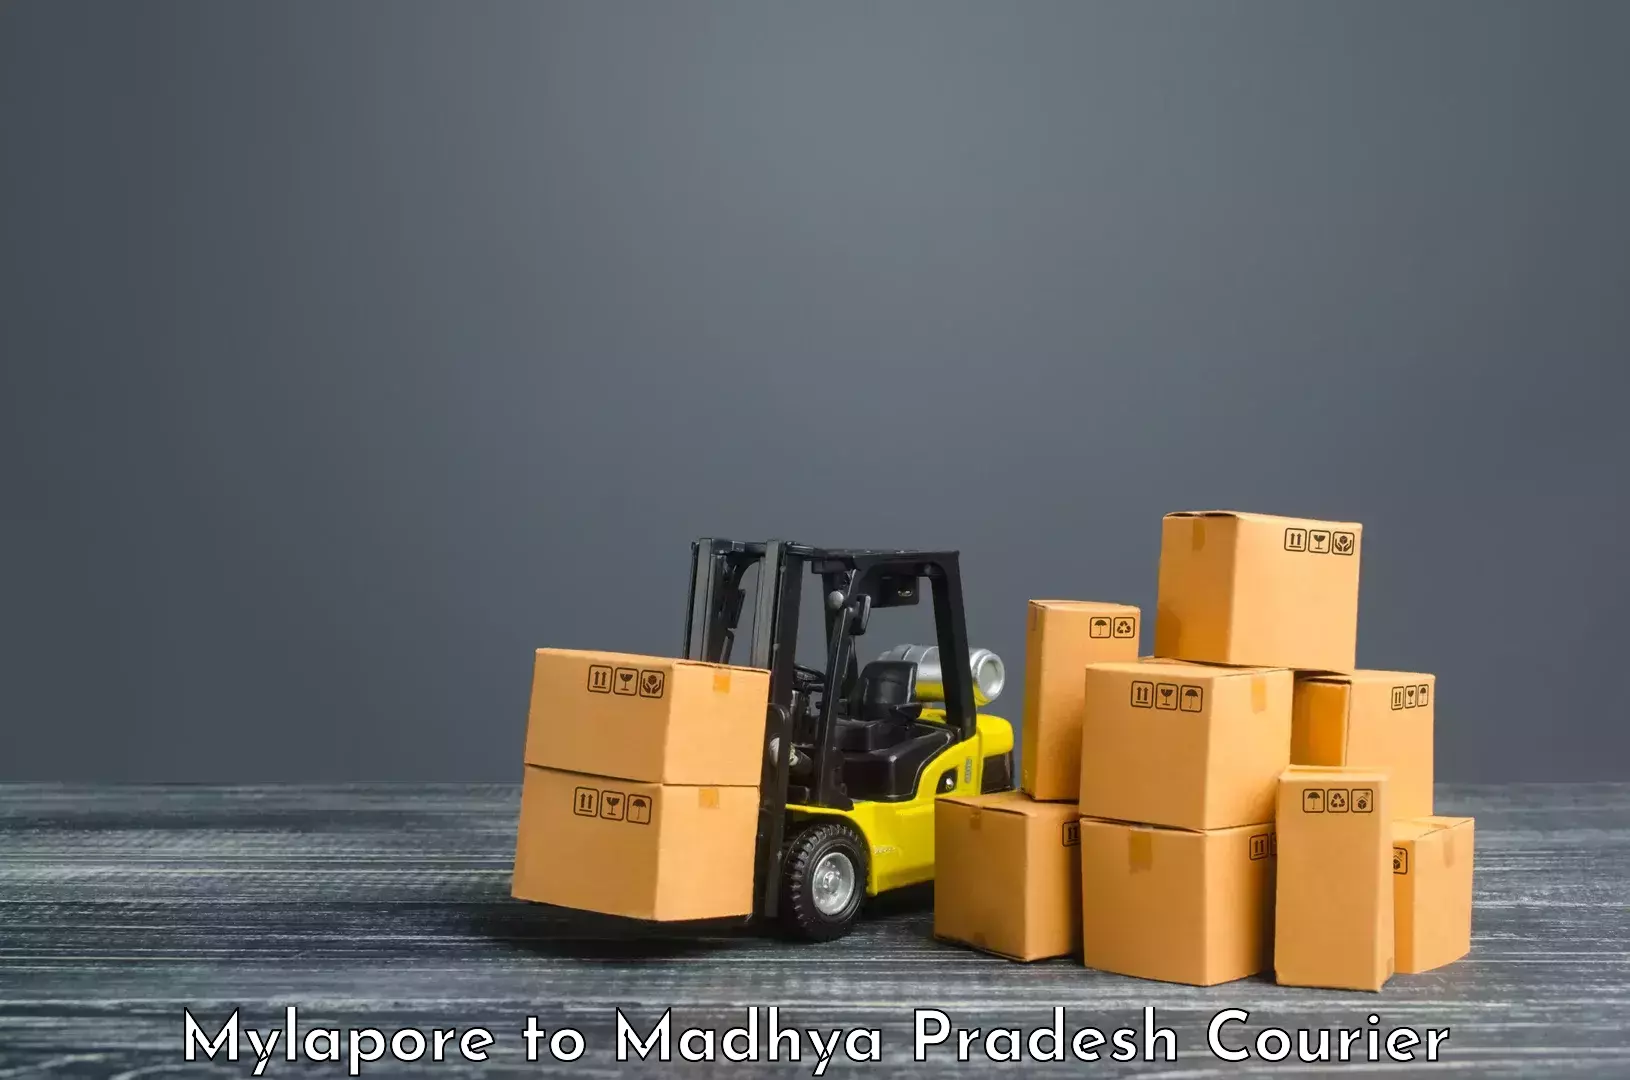 Tech-enabled shipping Mylapore to Jaitwara